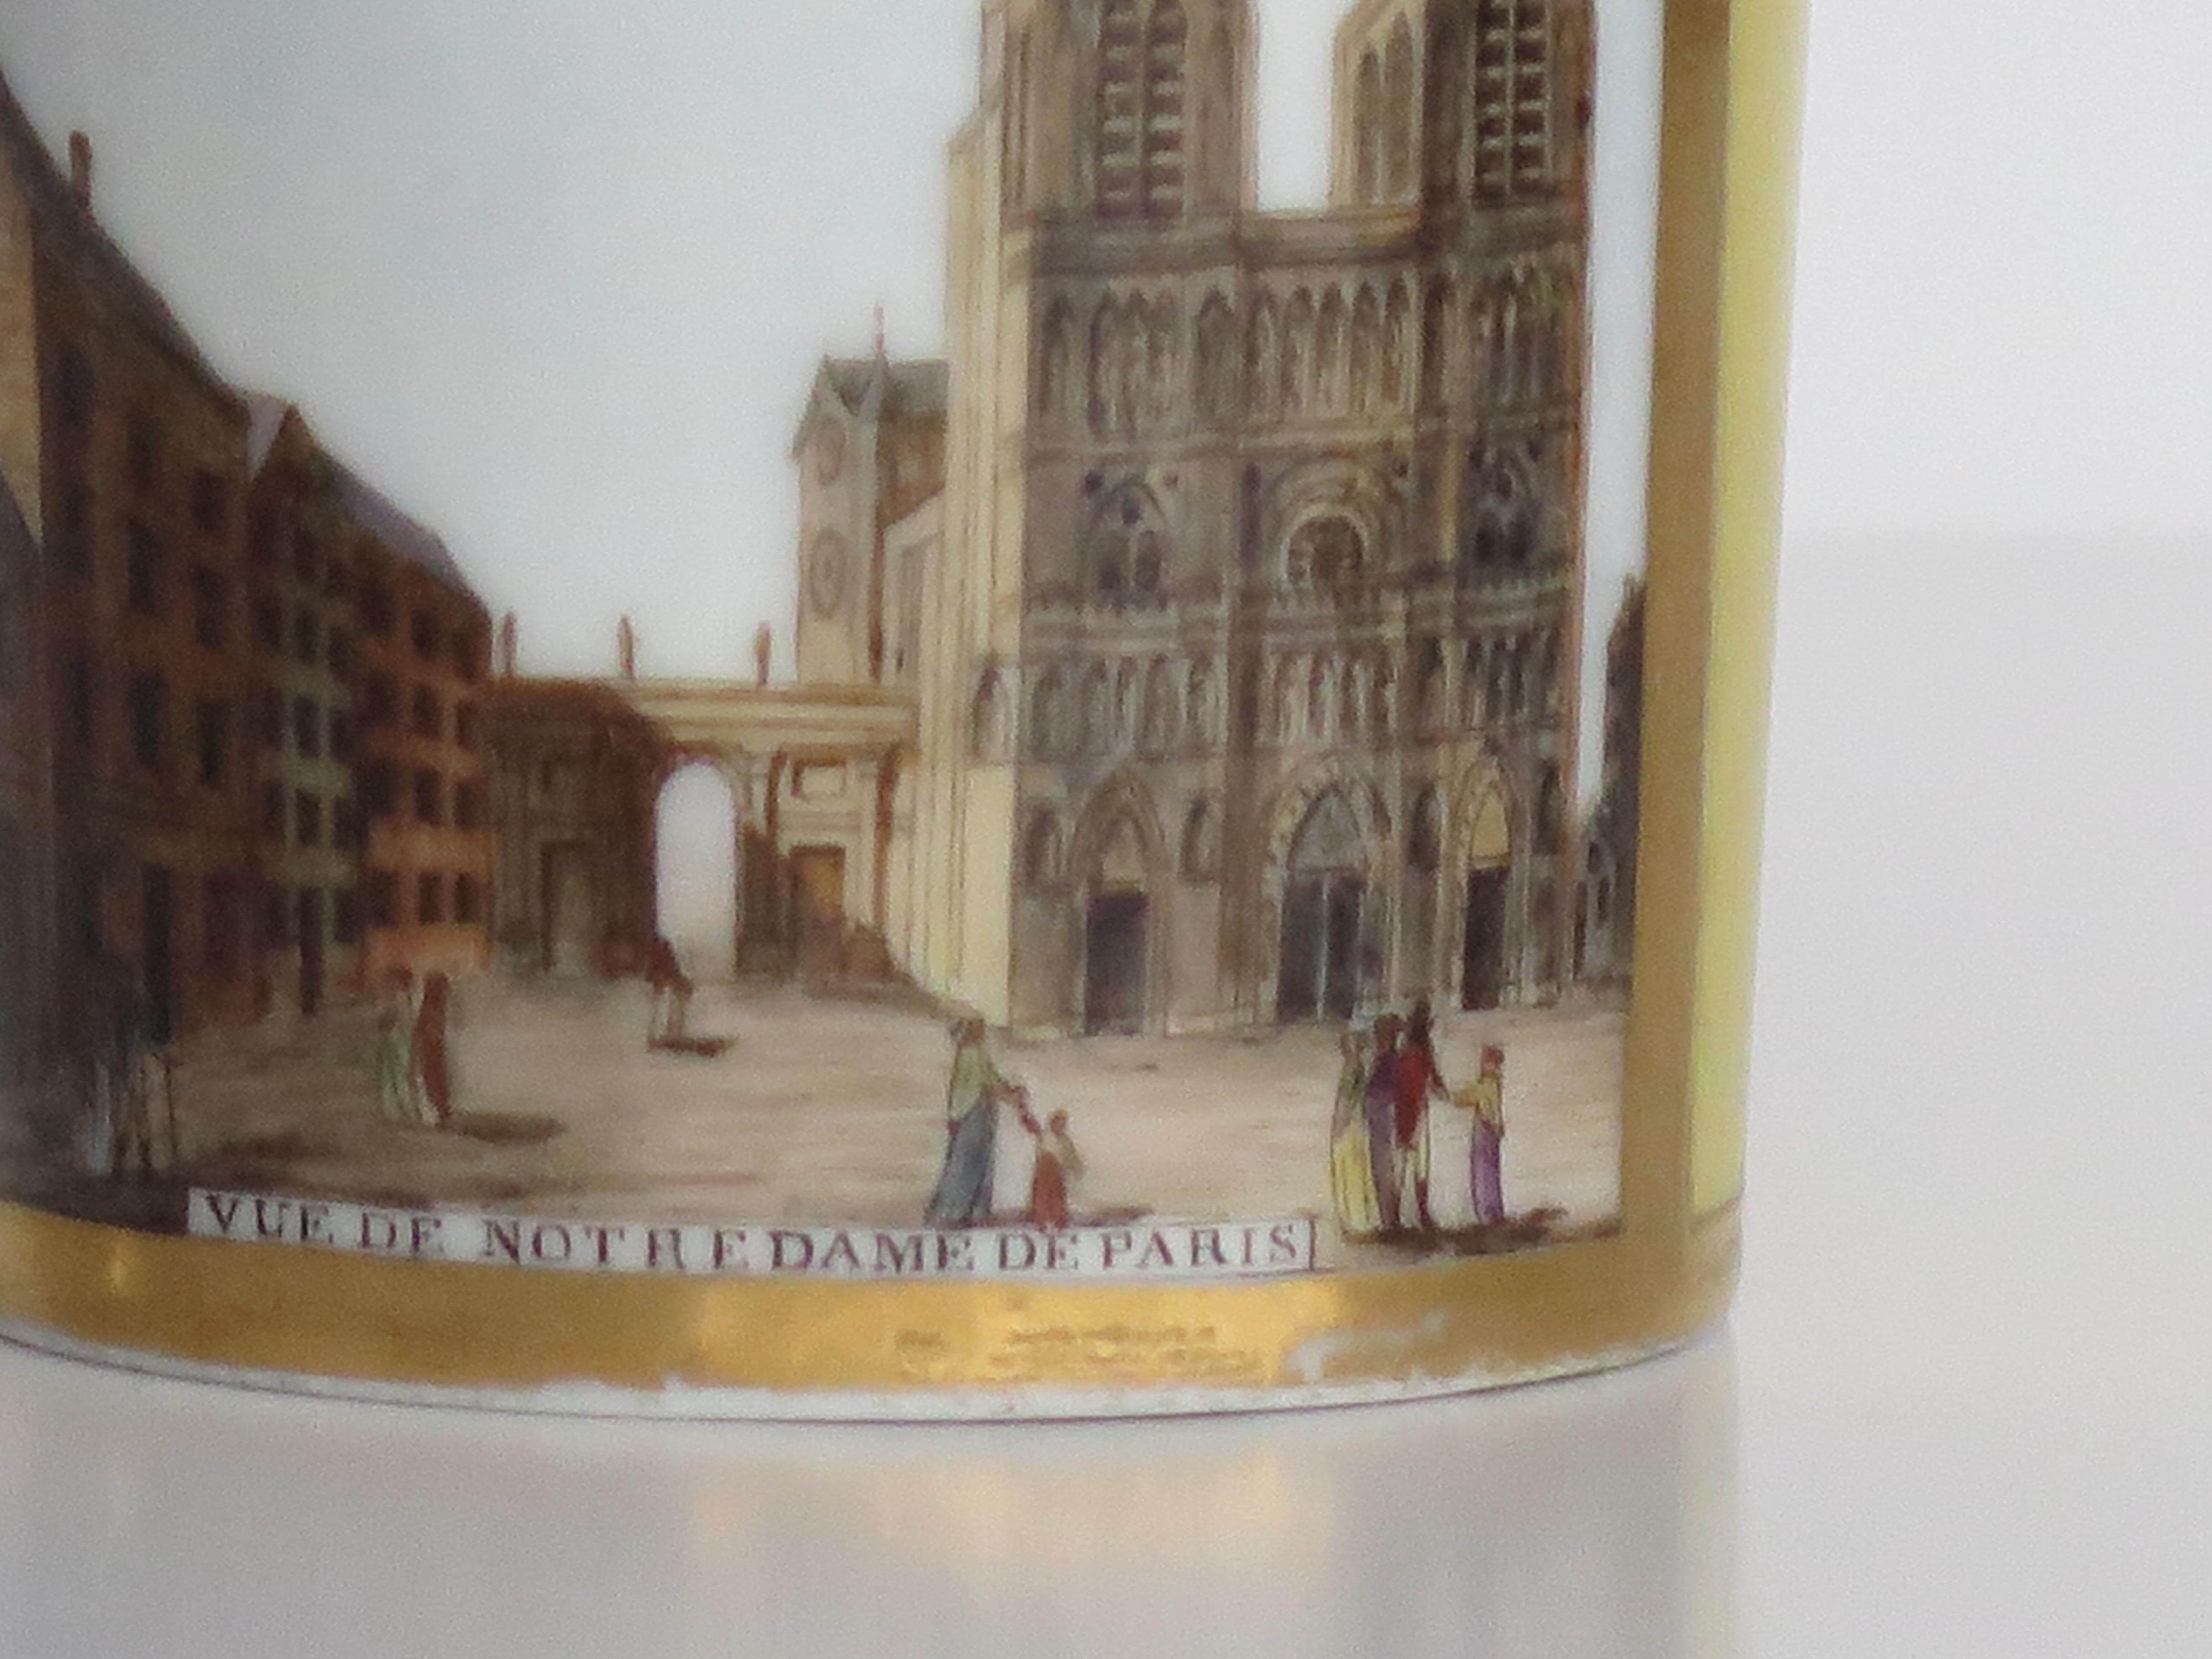 Feine Pariser Porzellan-Kaffeekanne Vue De Notredame De Paris, Französisch, um 1795 (Handbemalt) im Angebot